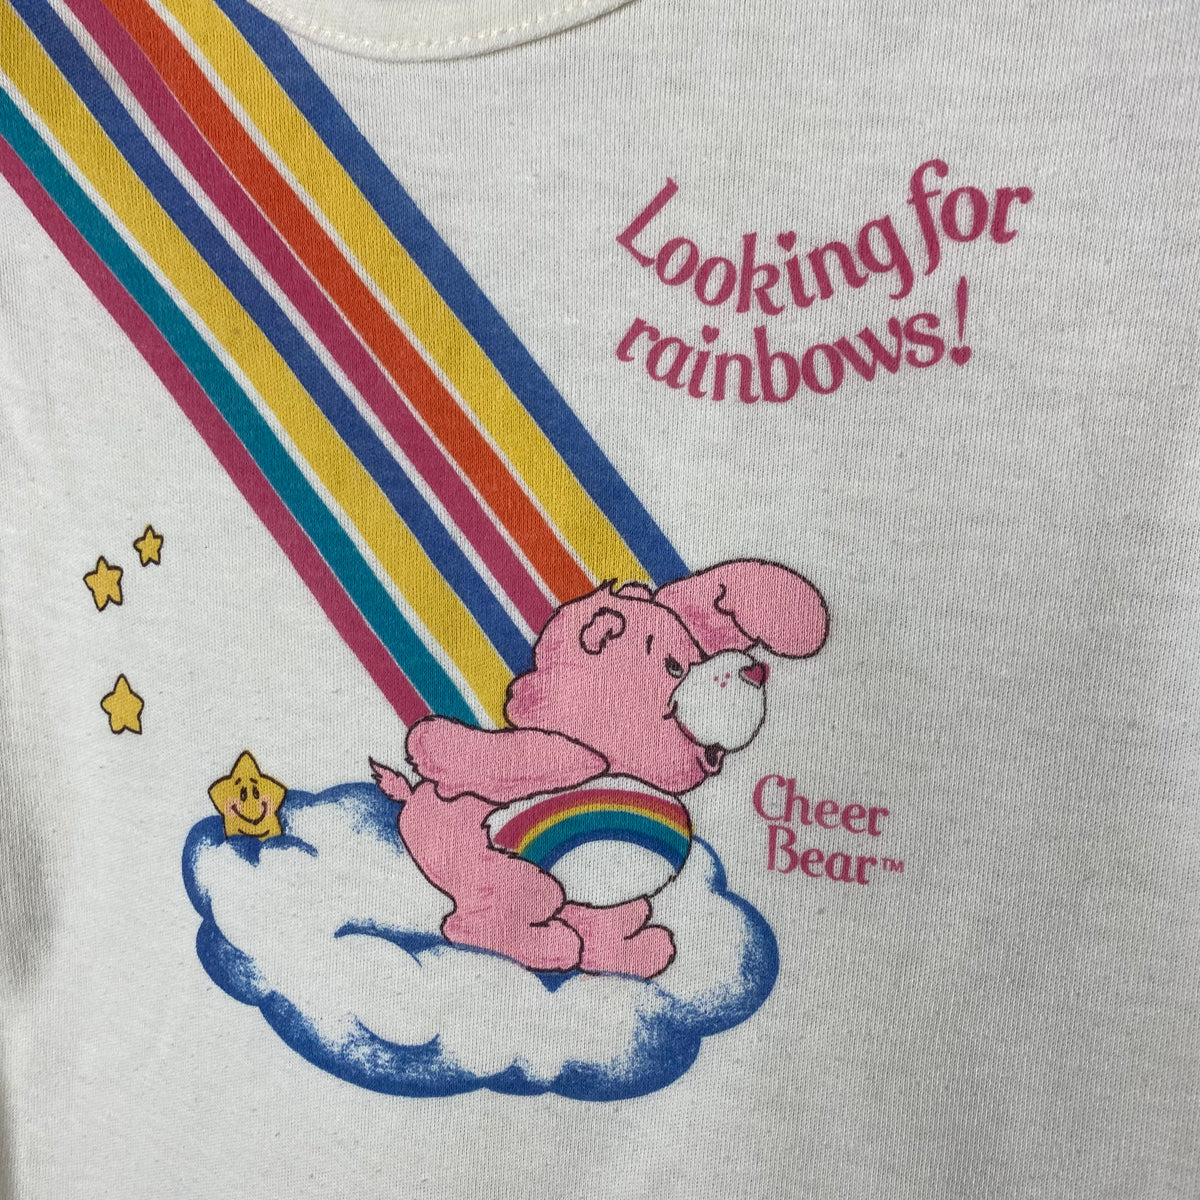 Care Bear Sleepy Rainbow Nostalgic 80s Retro Vintage Childhood Cartoon -  Care Bears - T-Shirt